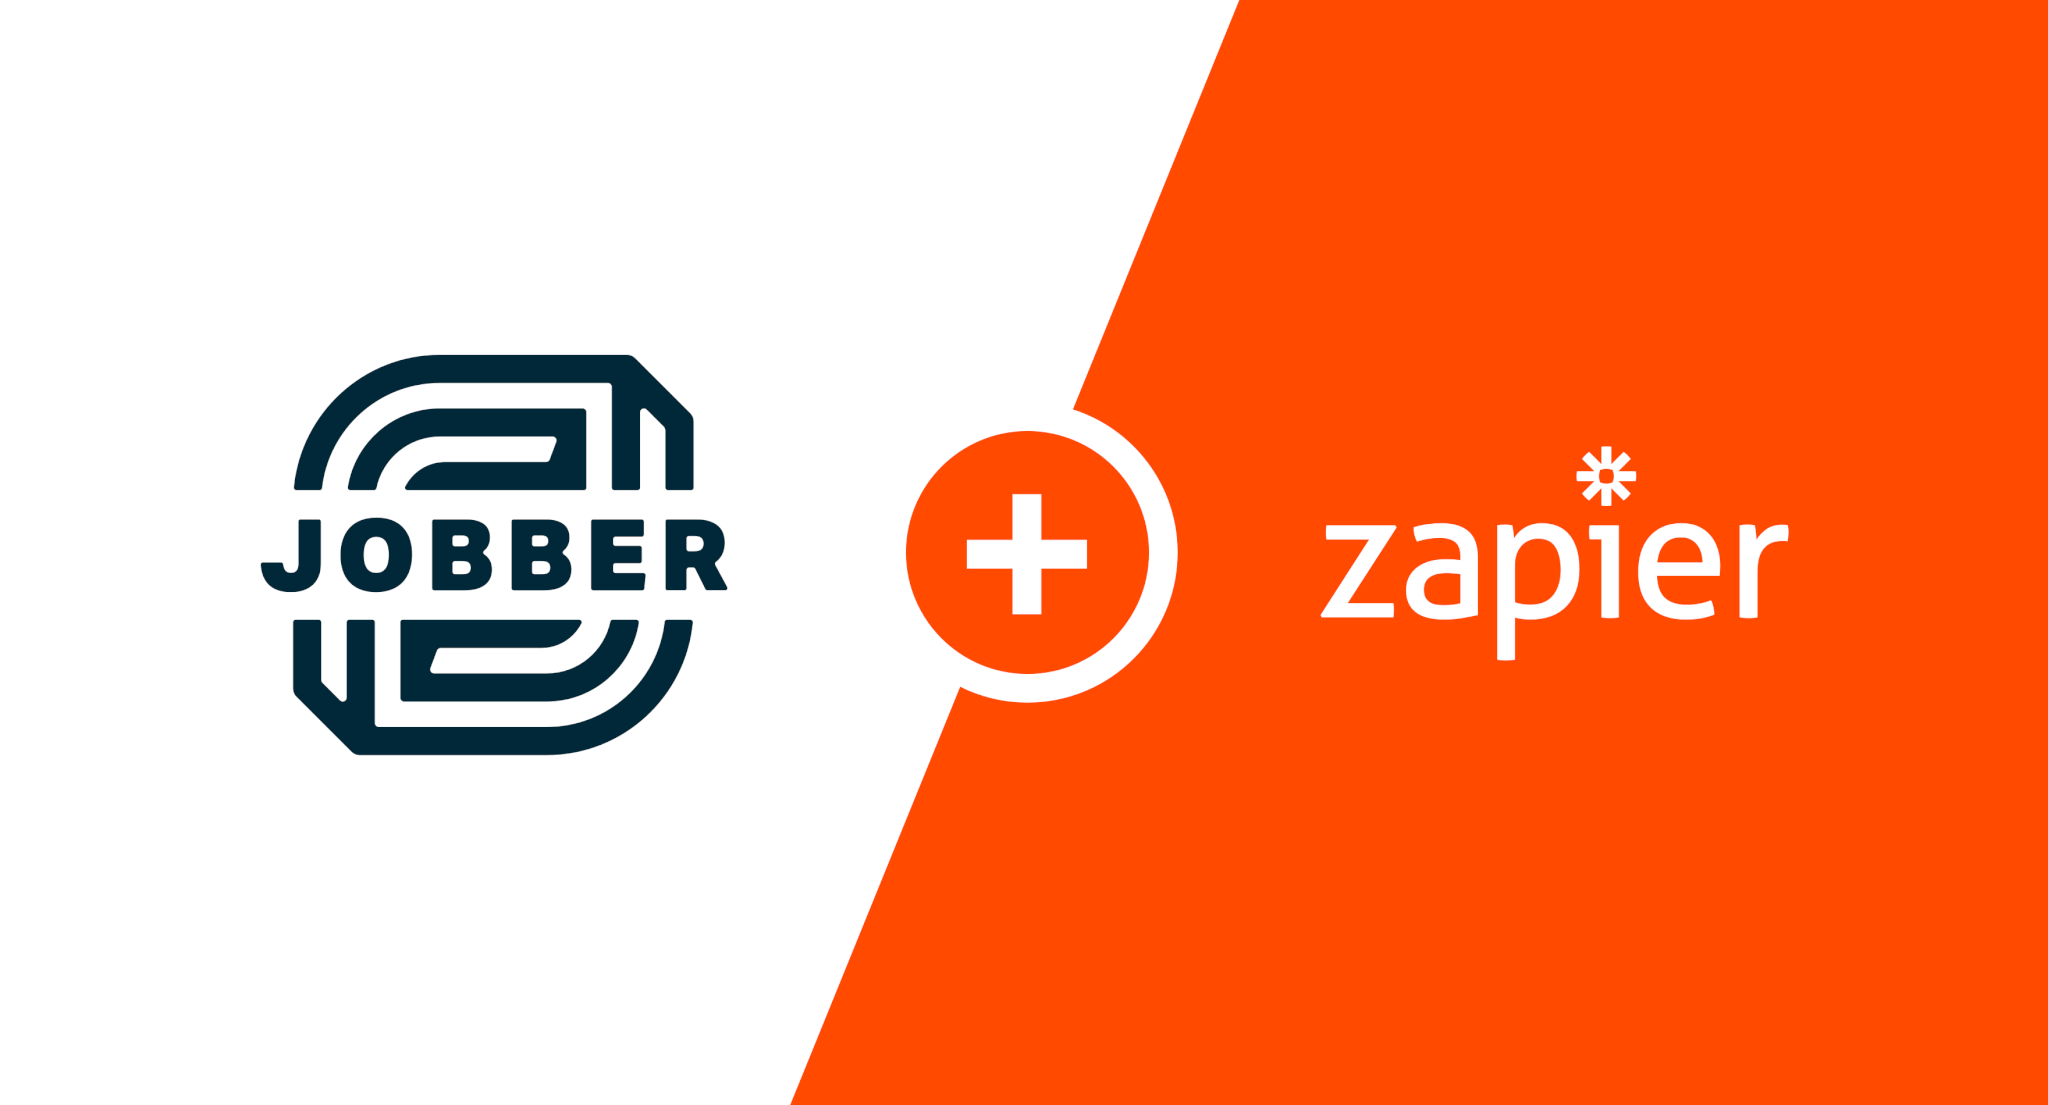 Jobber and Zapier logos